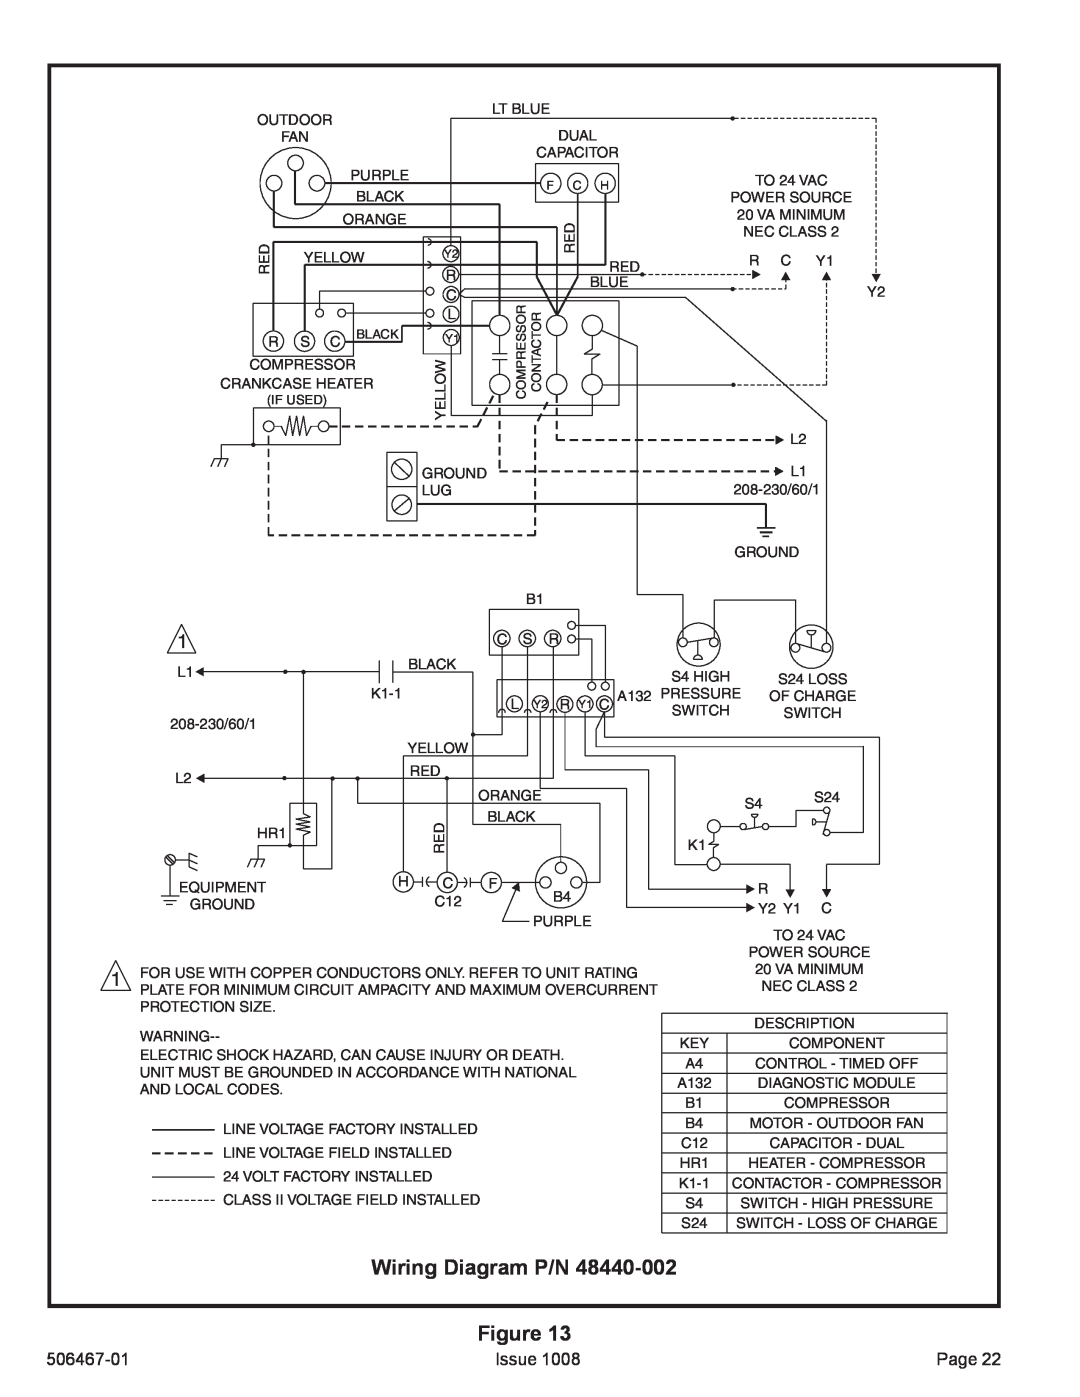 Allied Air Enterprises 4AC16LT manual Wiring Diagram P/N Figure 